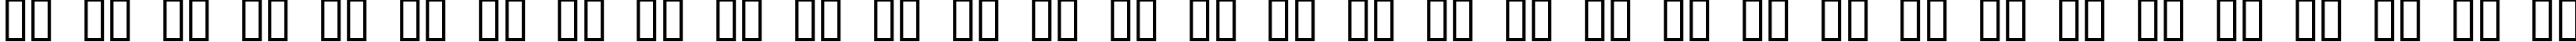 Пример написания русского алфавита шрифтом Cacophony Loud